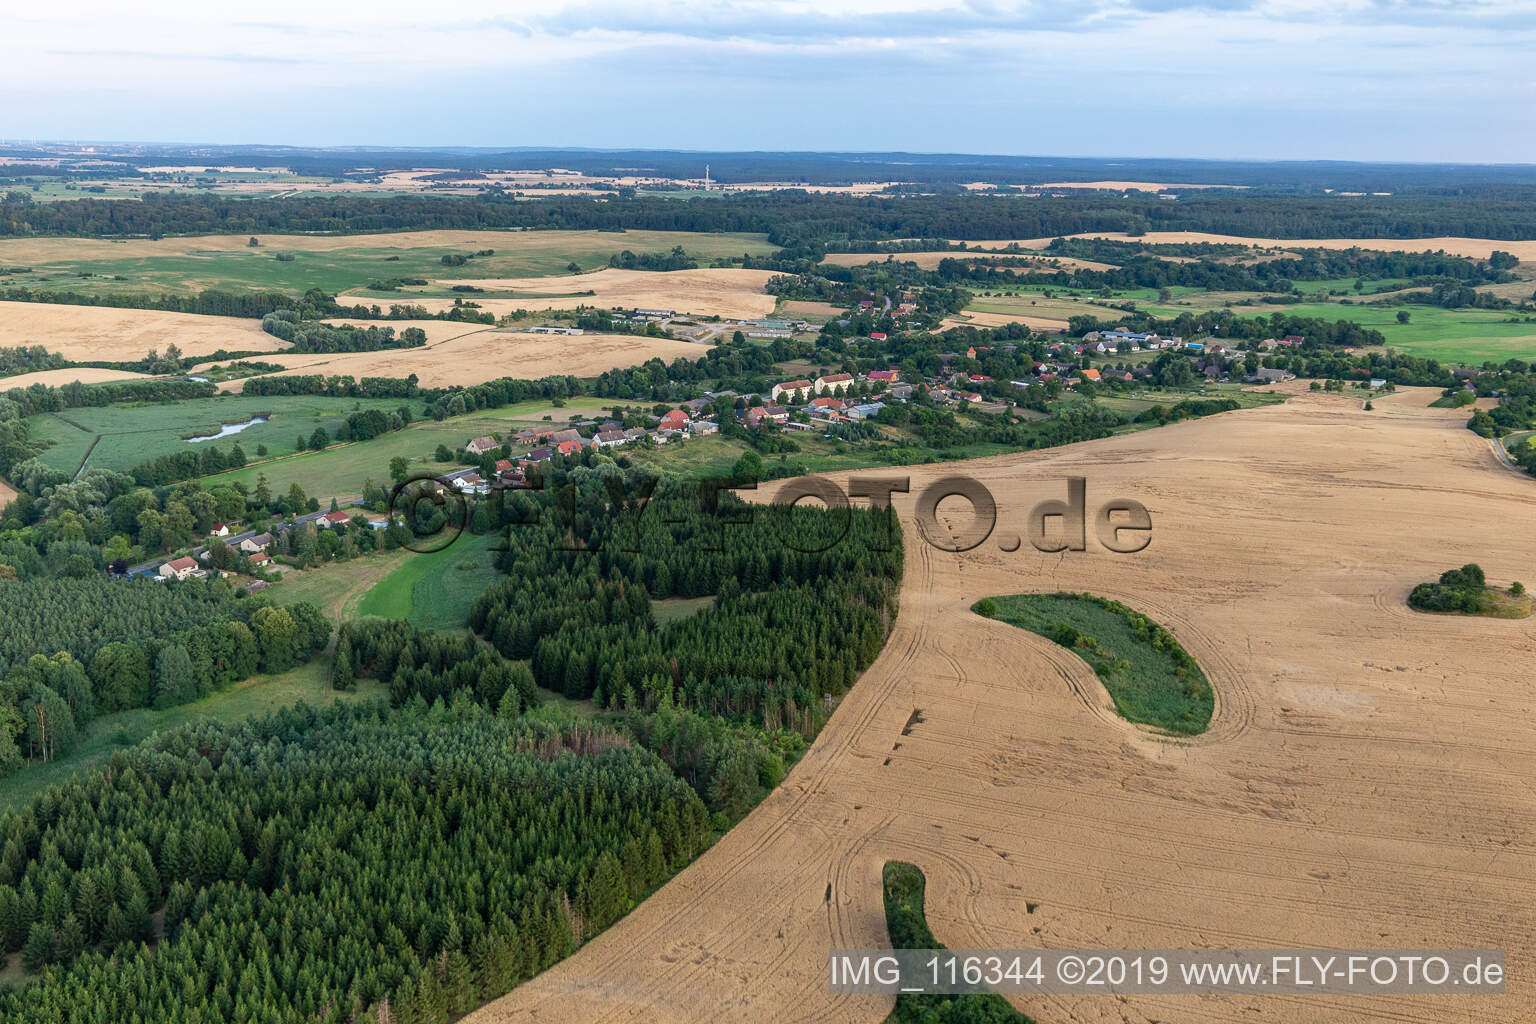 Flieth-Stegelitz in the state Brandenburg, Germany from above